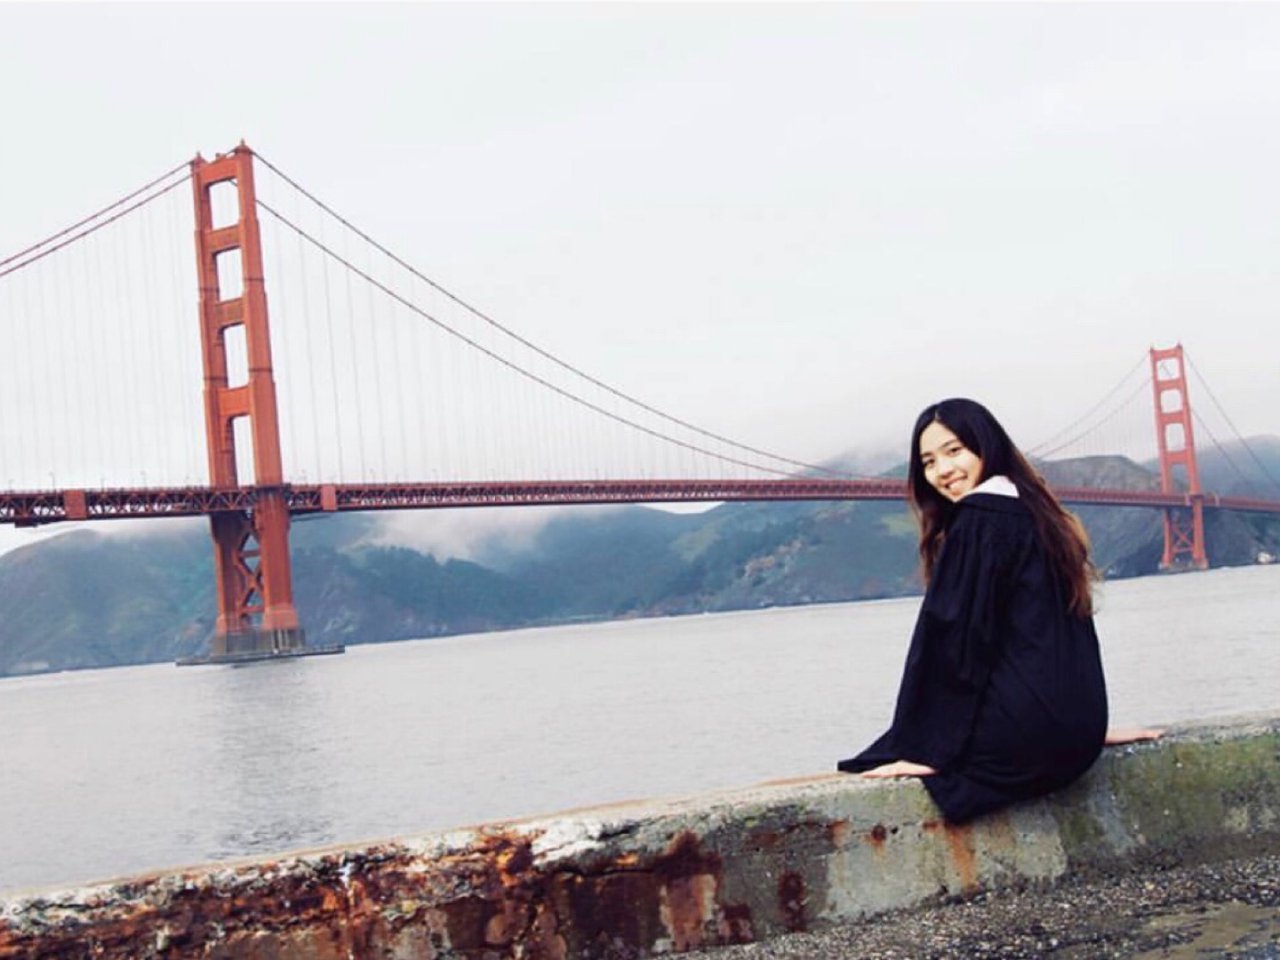 Golden Gate Park,San Francisco